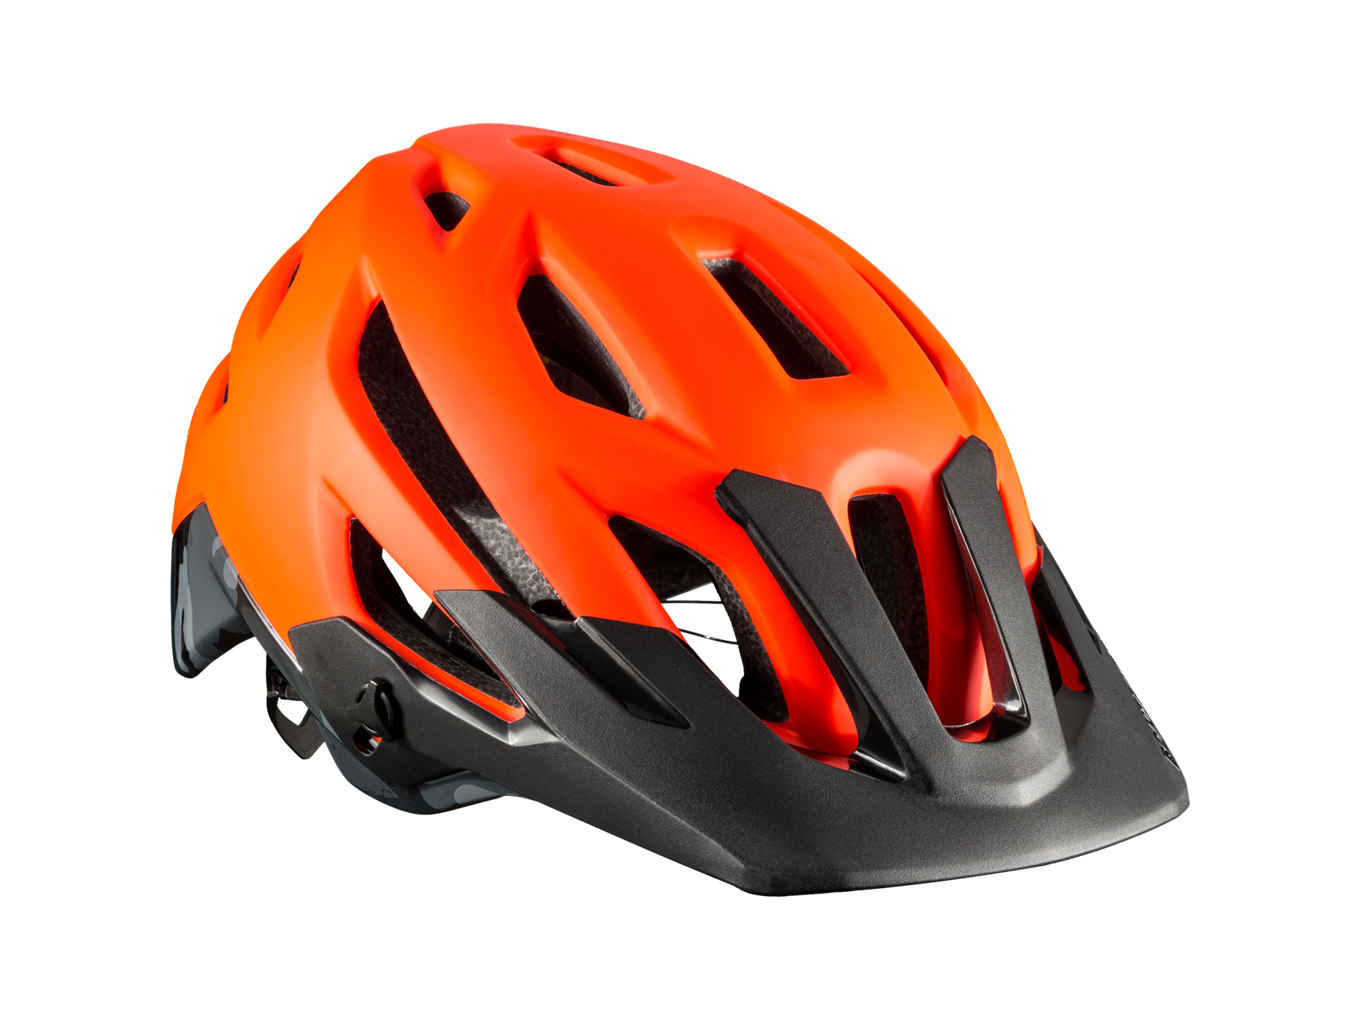 safest cycling helmets 2020